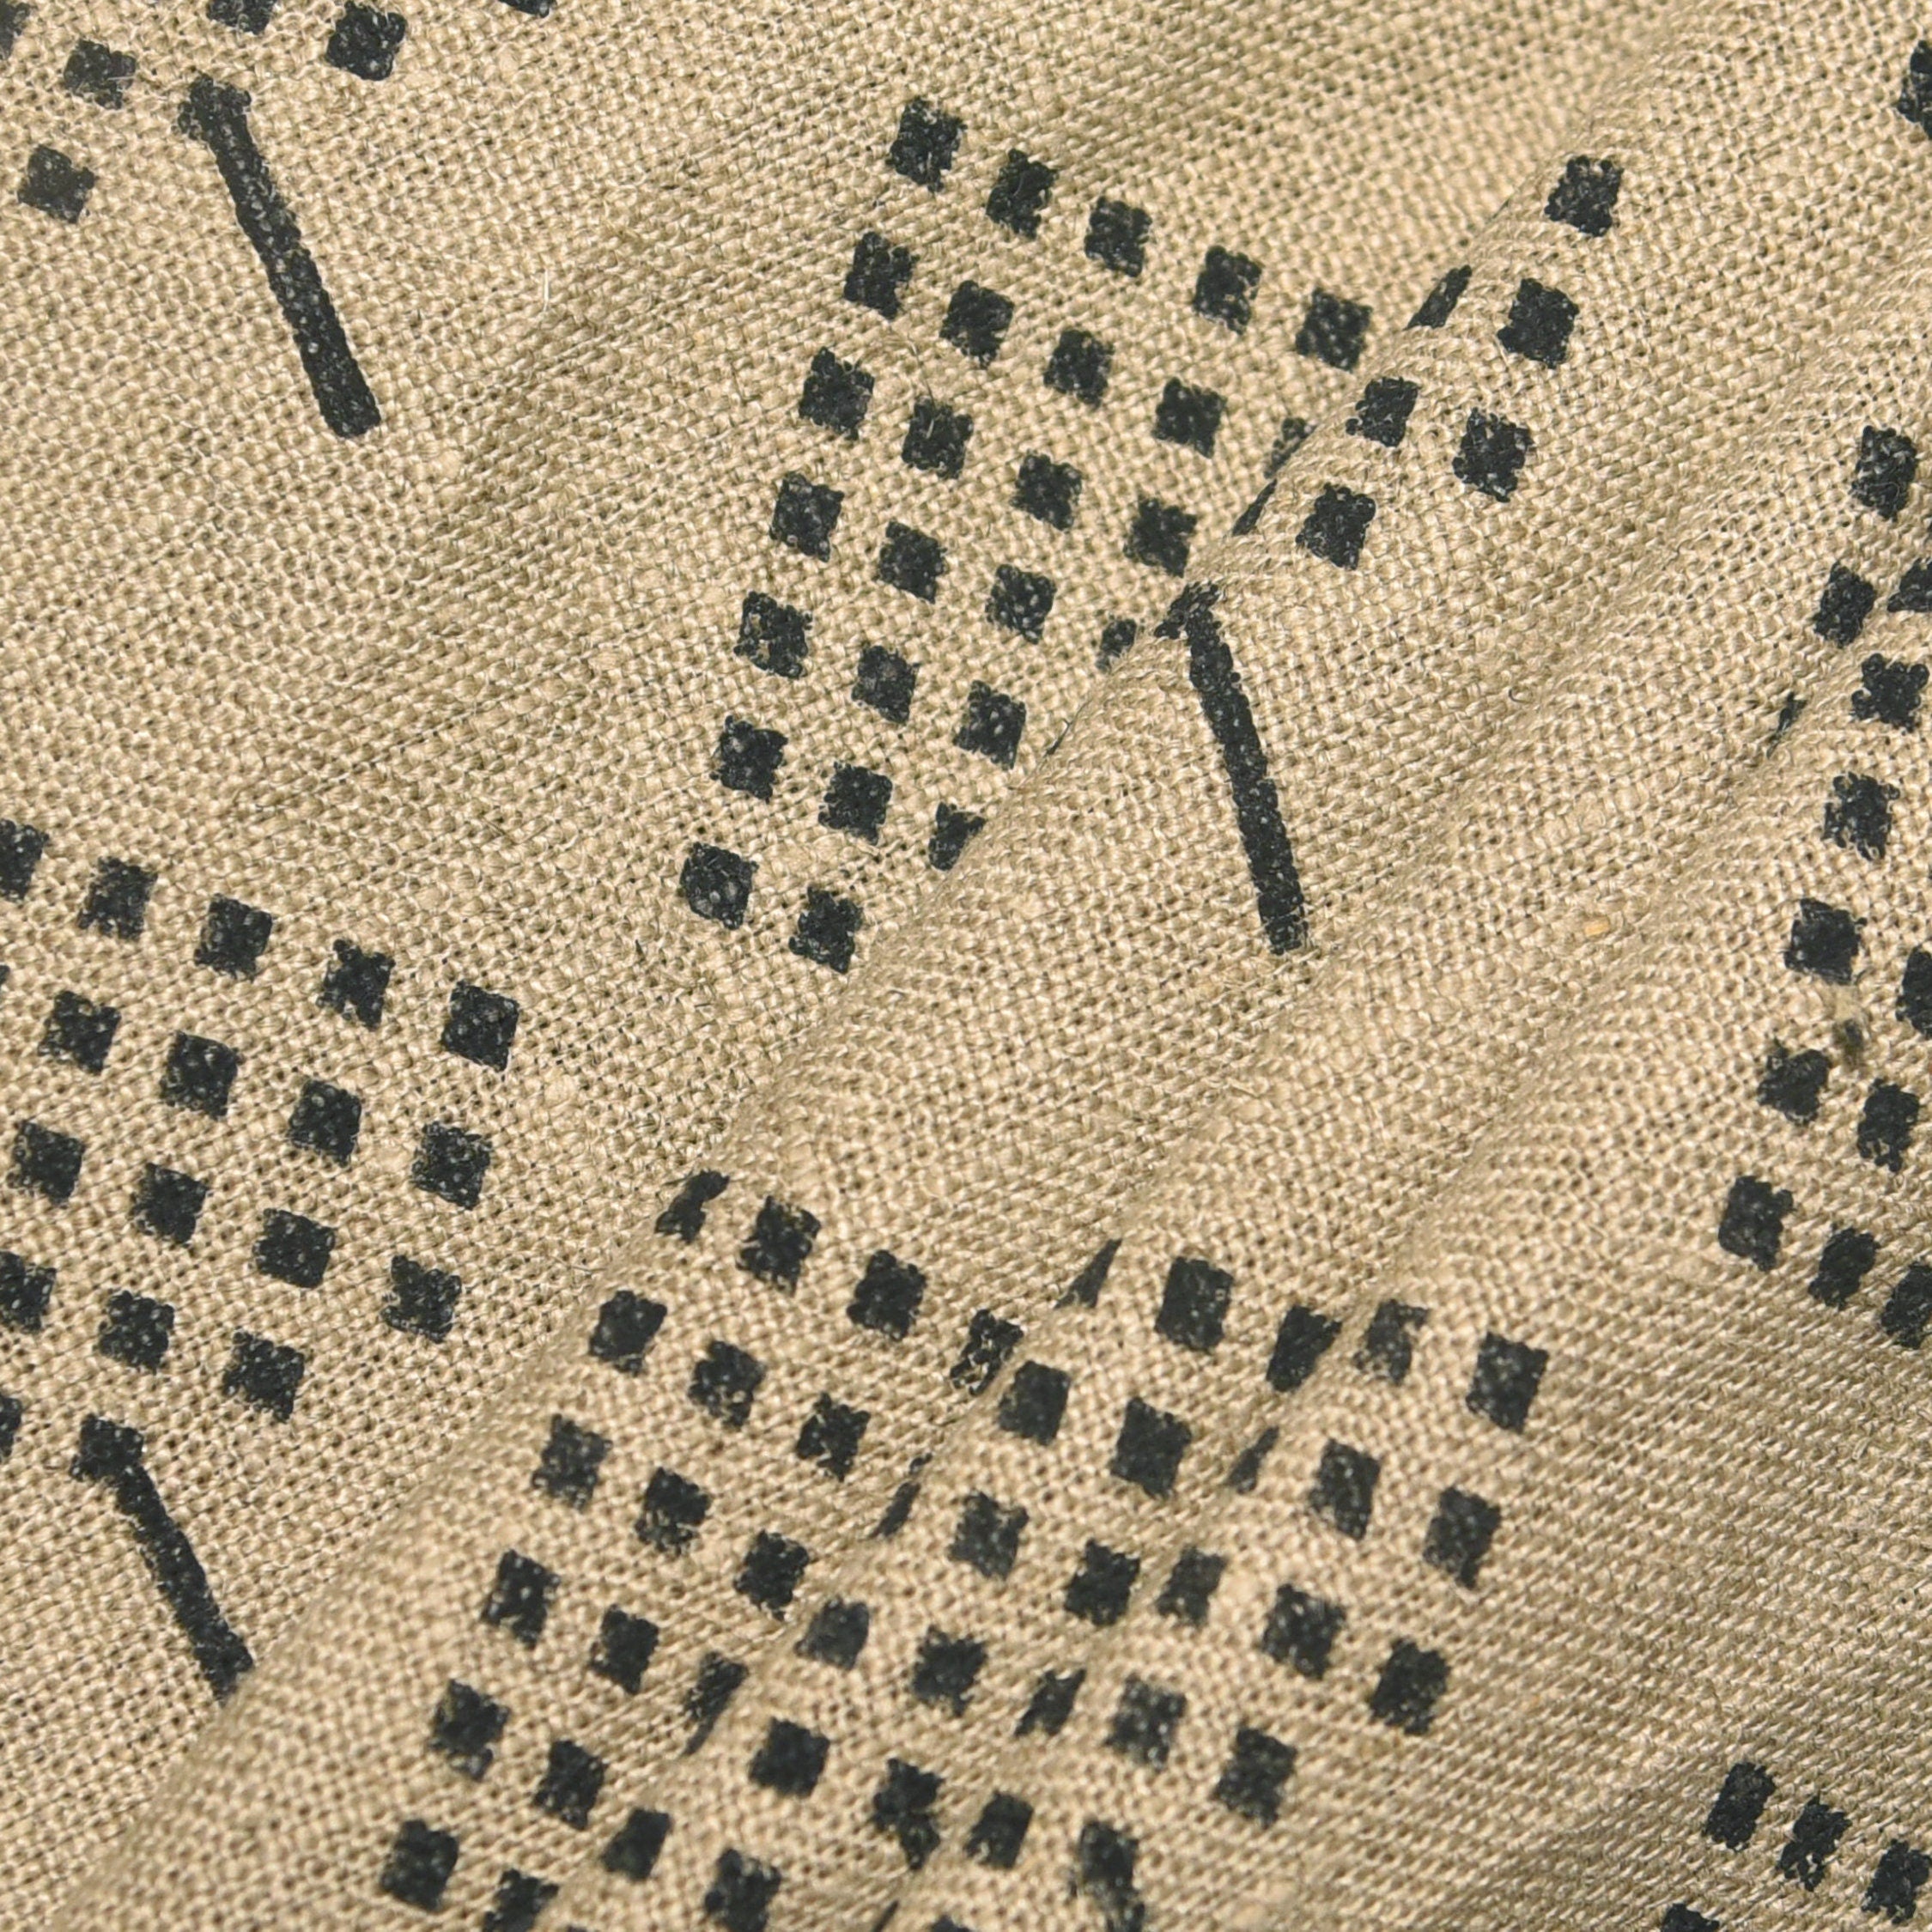 Block Print Linen Fabric, Umbrella  Block Print Handloom Linen Fabric Heavy Linen Fabric,Upholstery Fabric, Pillow Cover Fabric, Thick Fabric Natural Linen